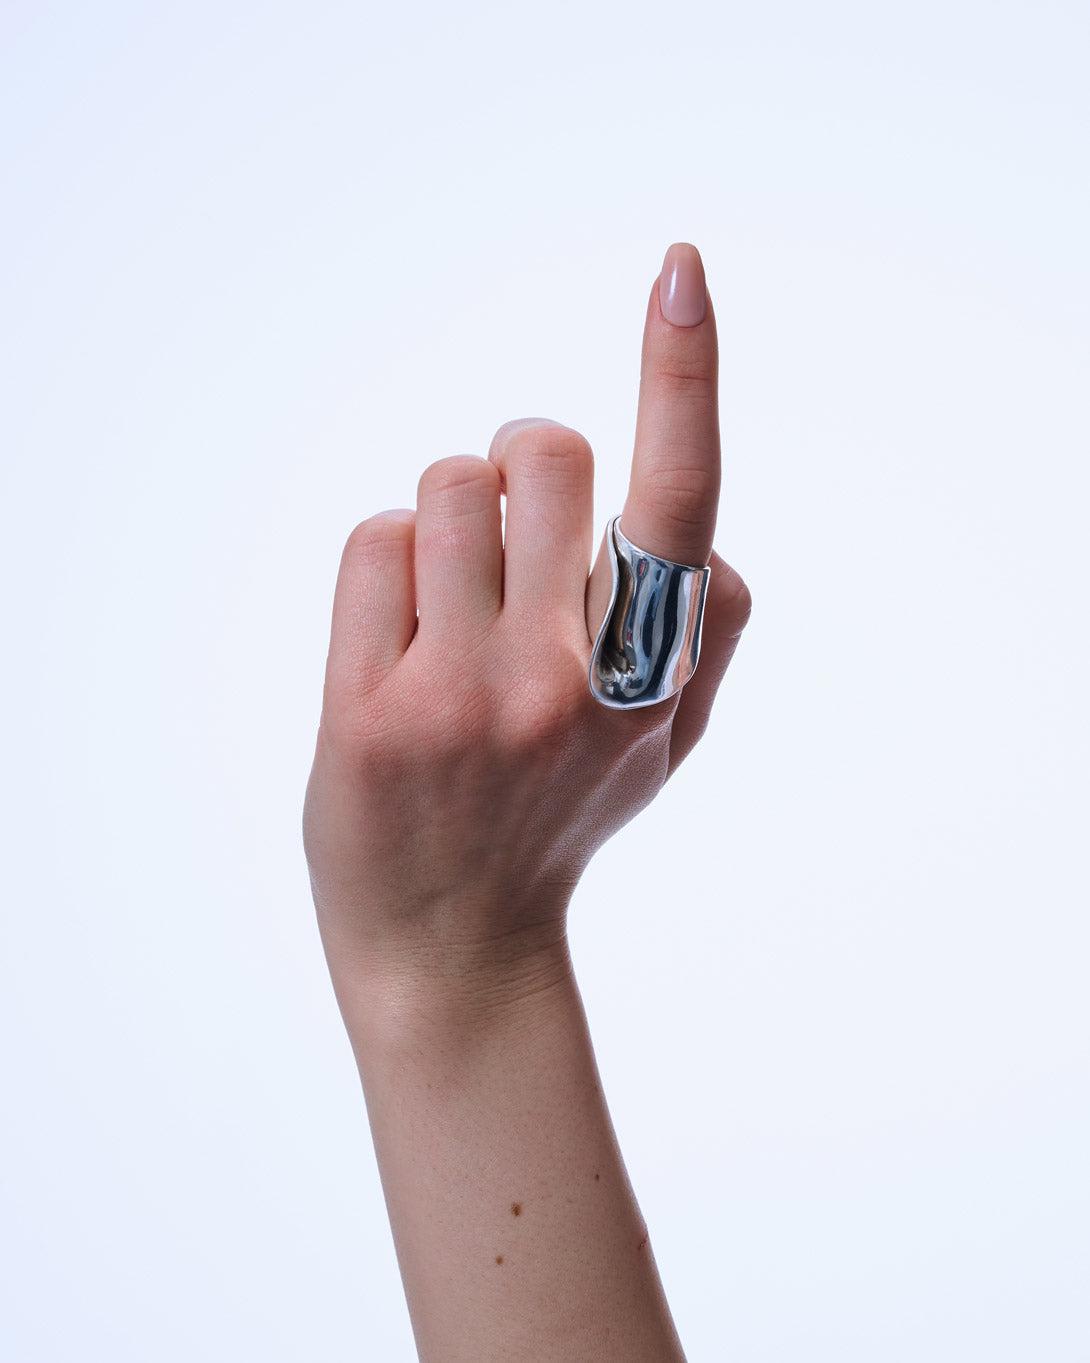 Finger Gap Ring - Jewelry - Milko Boyarov - Elevastor